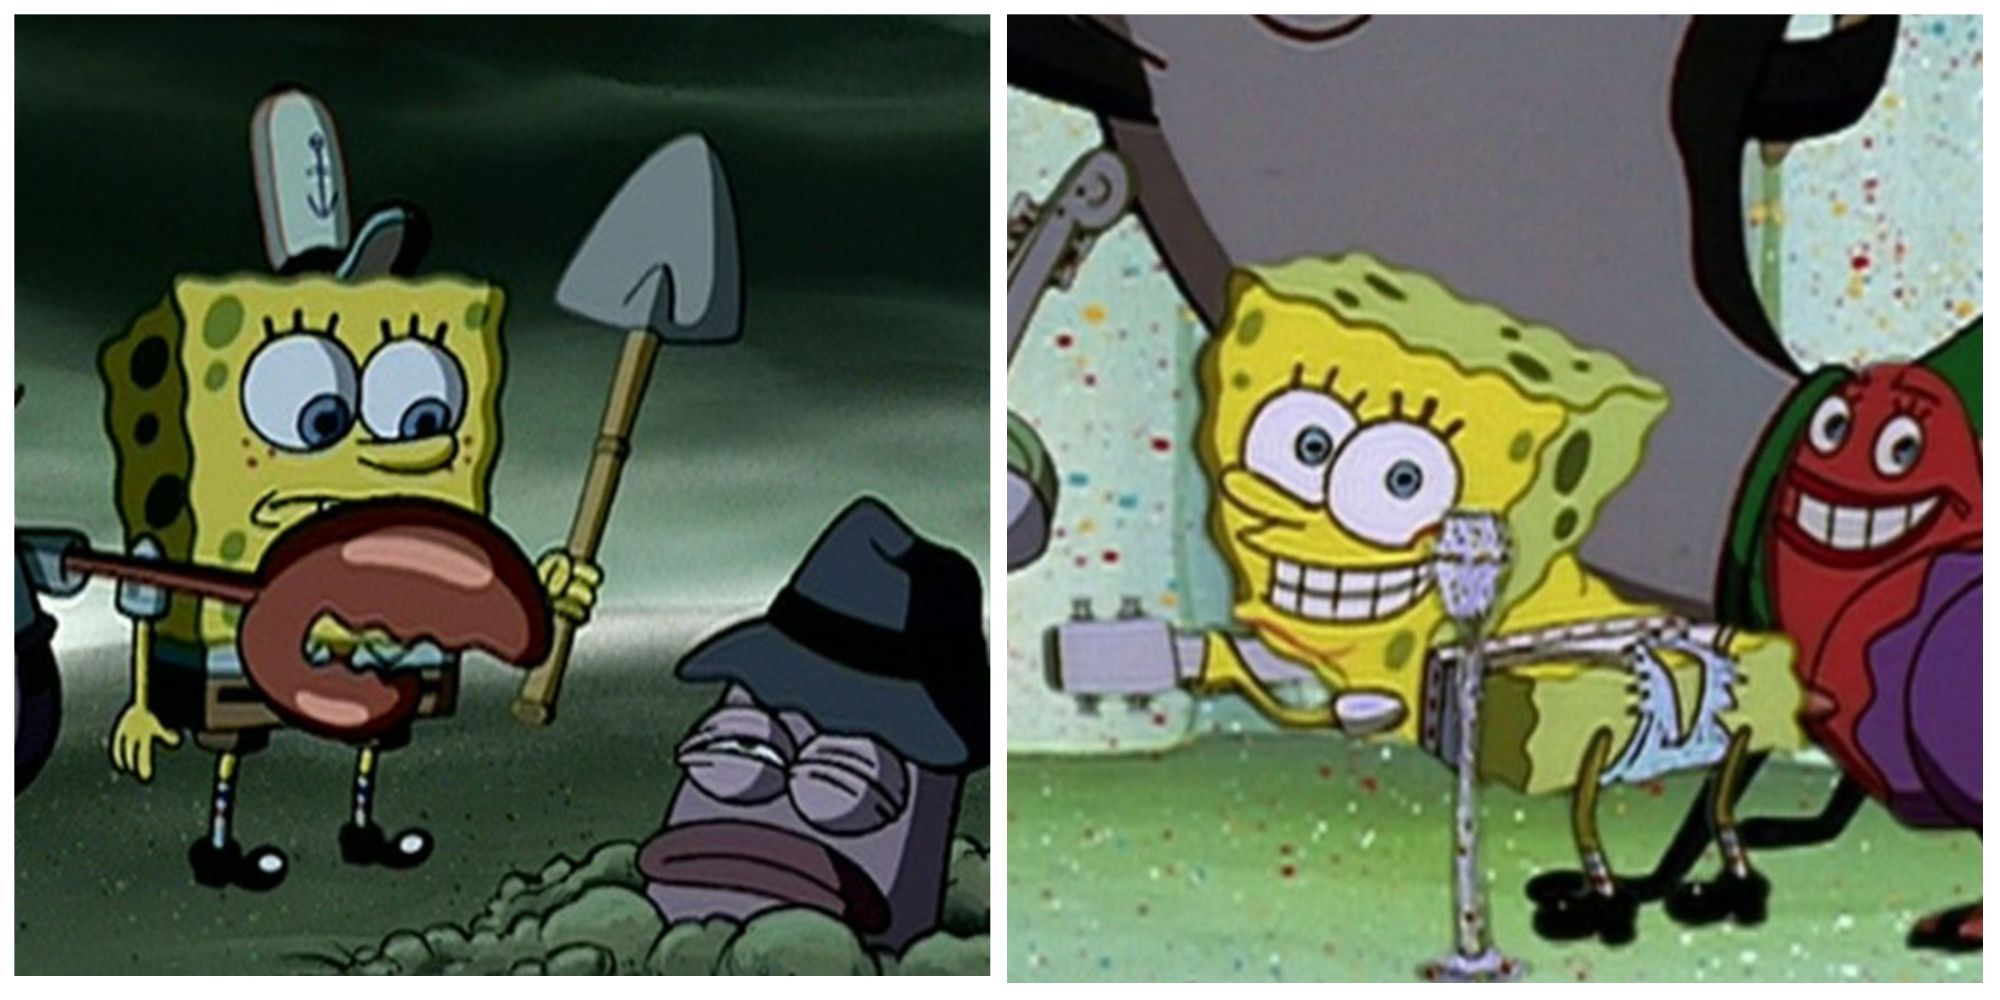 Left: SpogeBob buries a body. Right: Spongebob rips his pants. Image sources: pagelagi.com and gamezxc.com